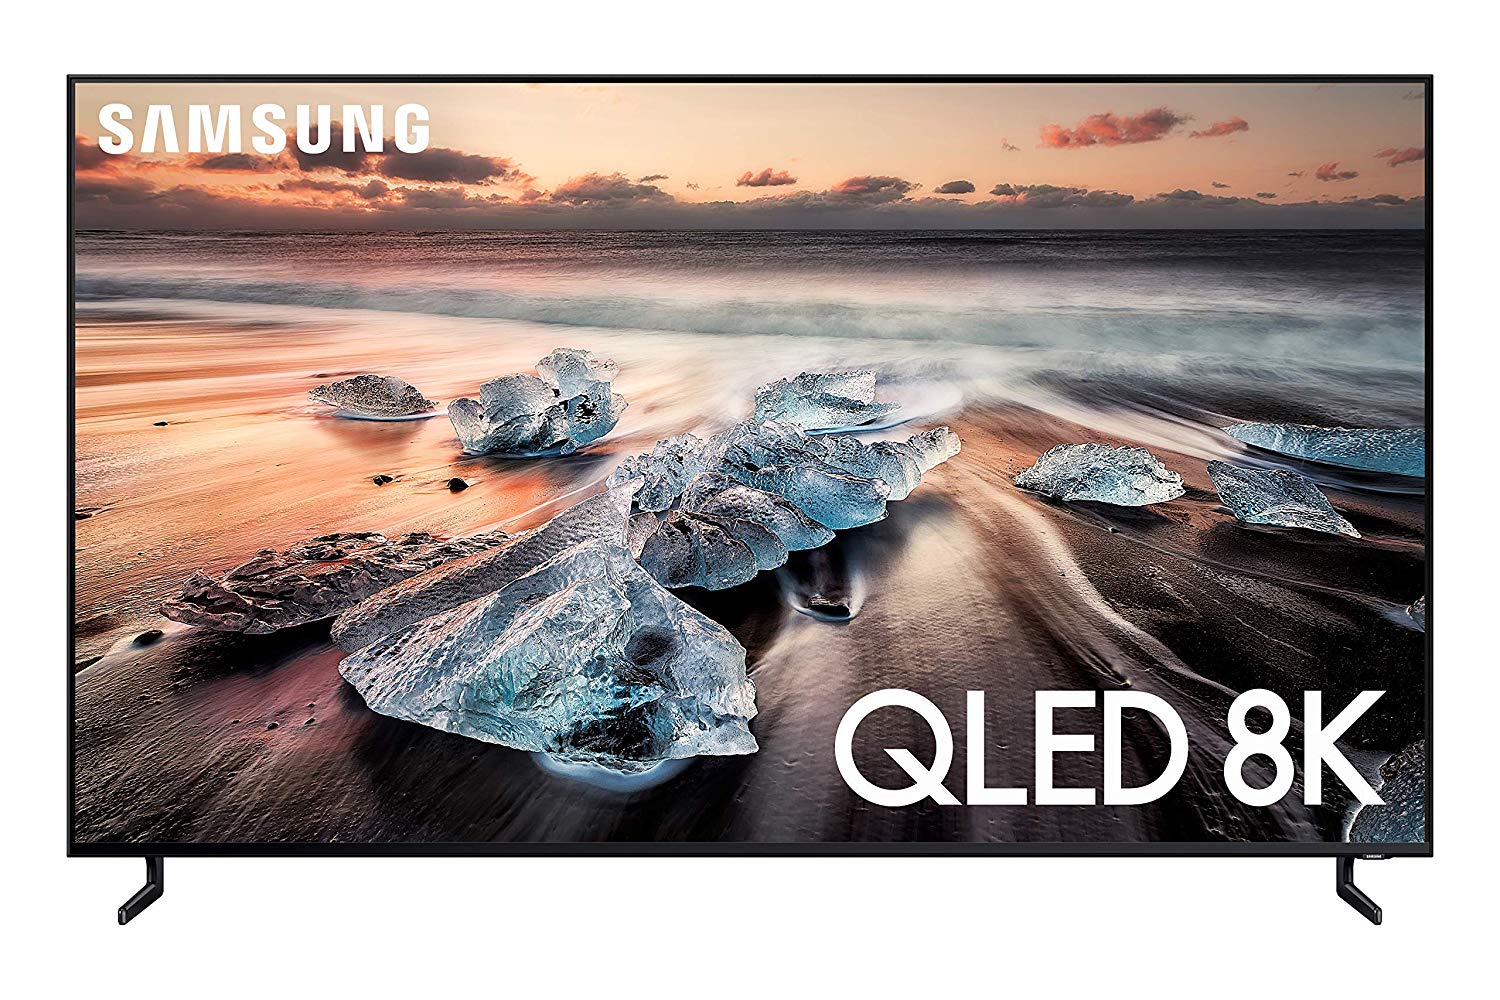 Samsung QN65Q900RBFXZA Flat 65 QLED 8K Q900 Series Smart TV 